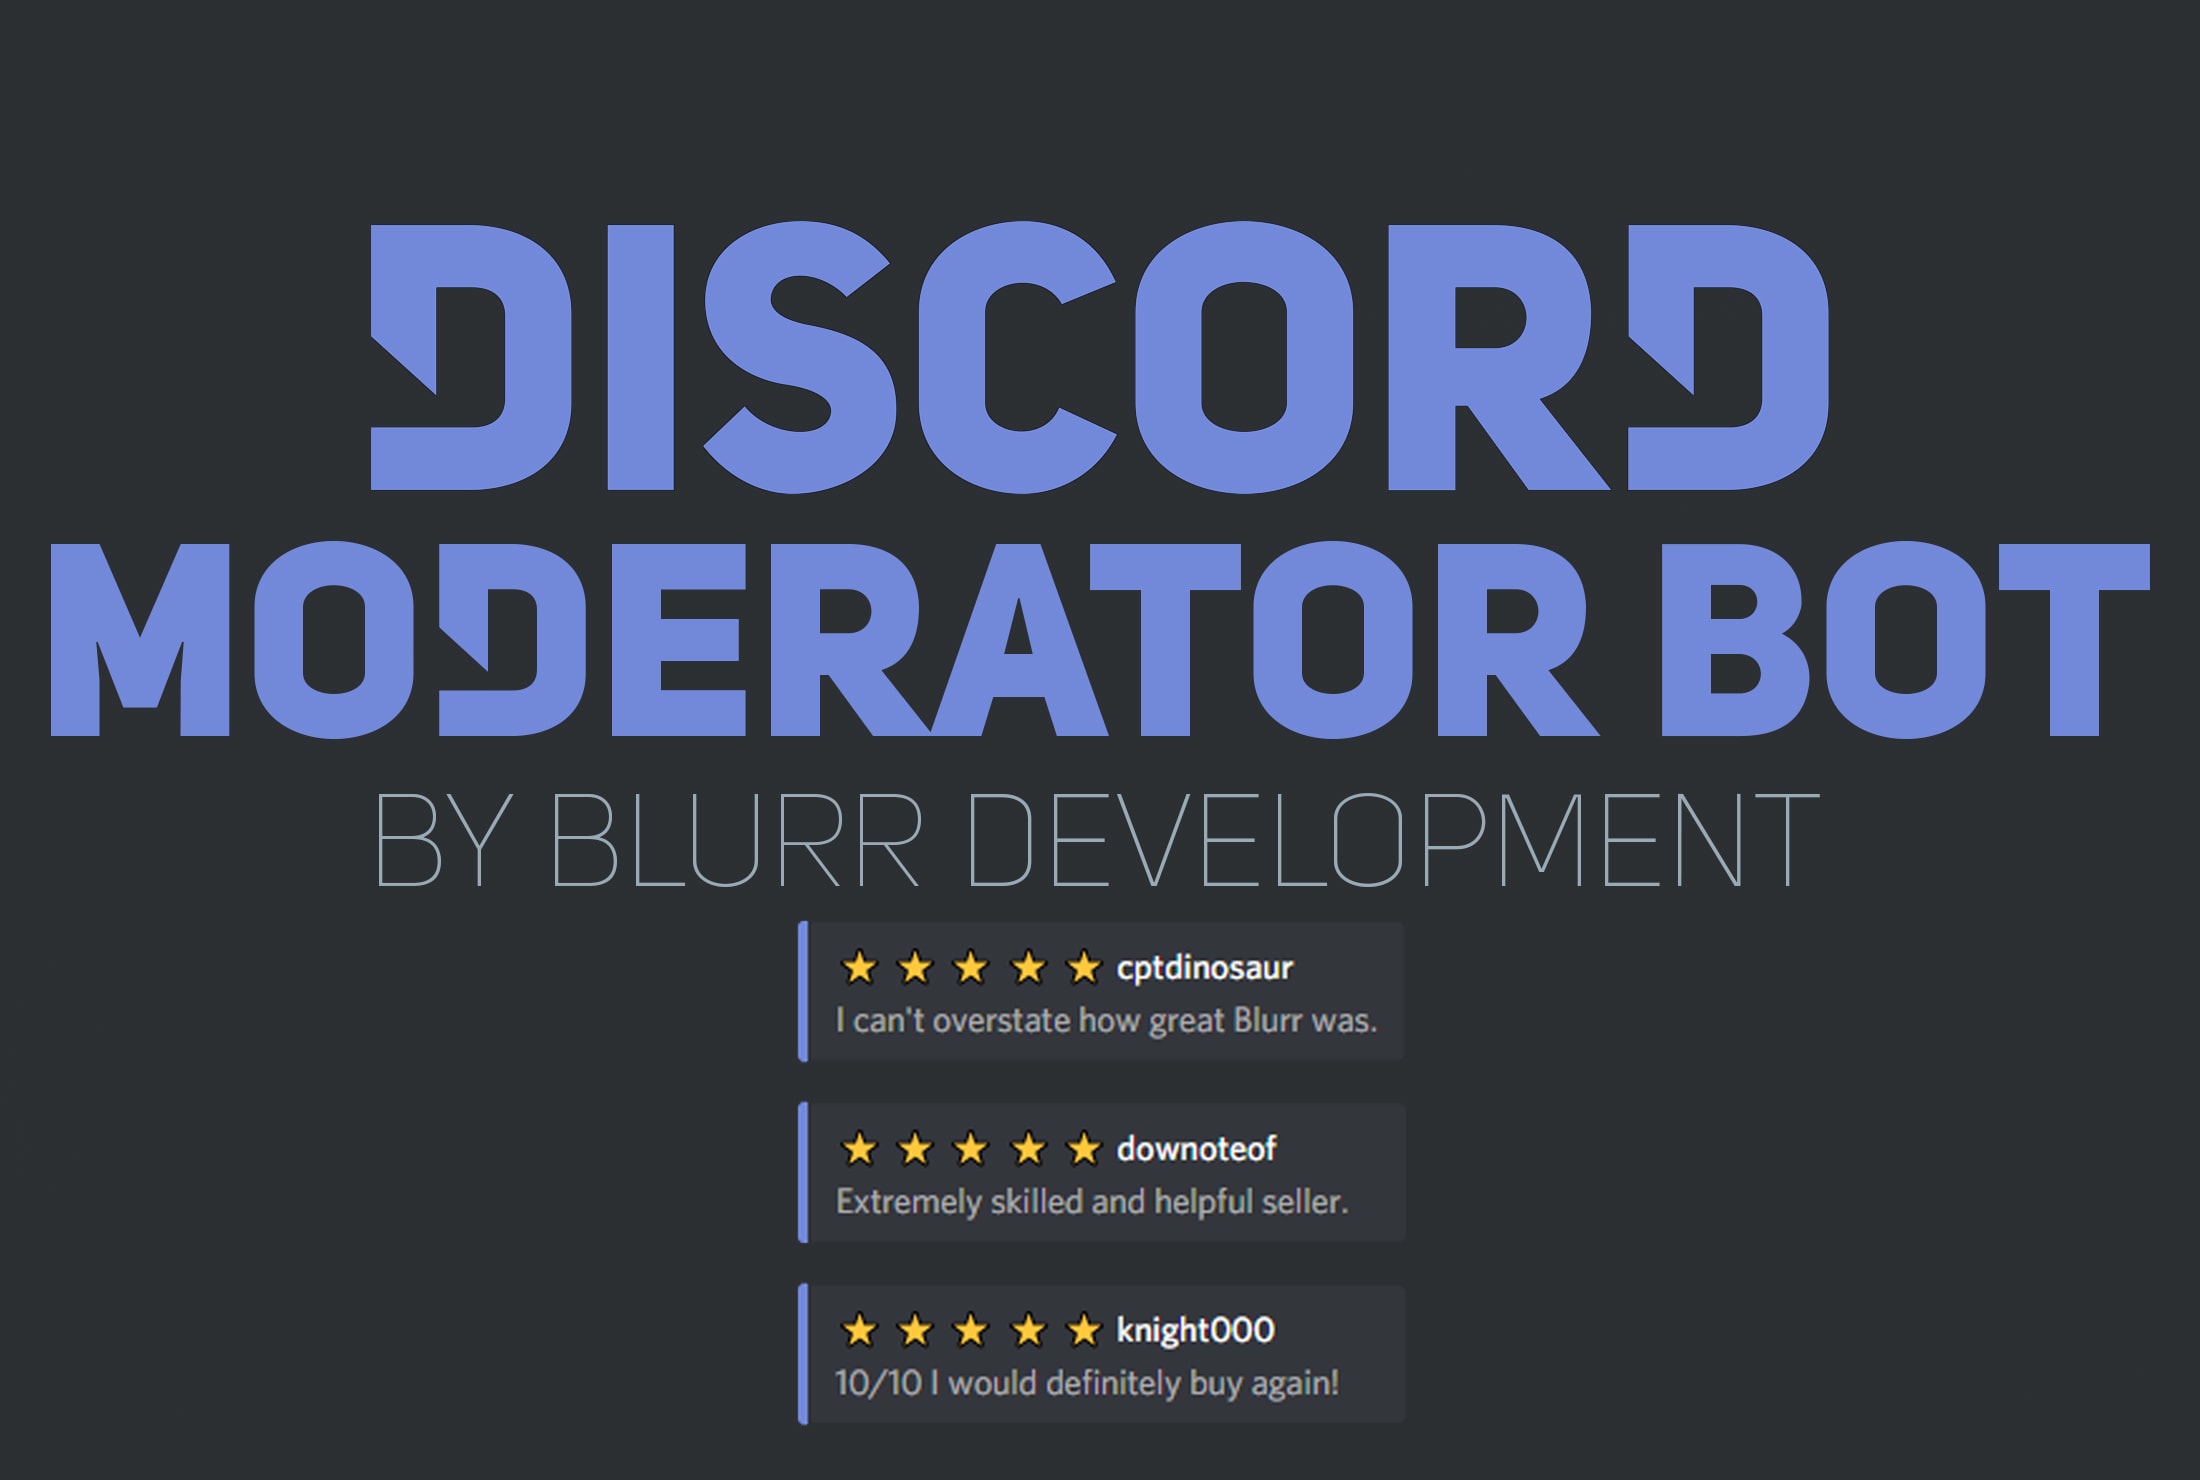 Multitud escena Vientre taiko Make a moderator discord bot in c sharp by Blurrdev | Fiverr